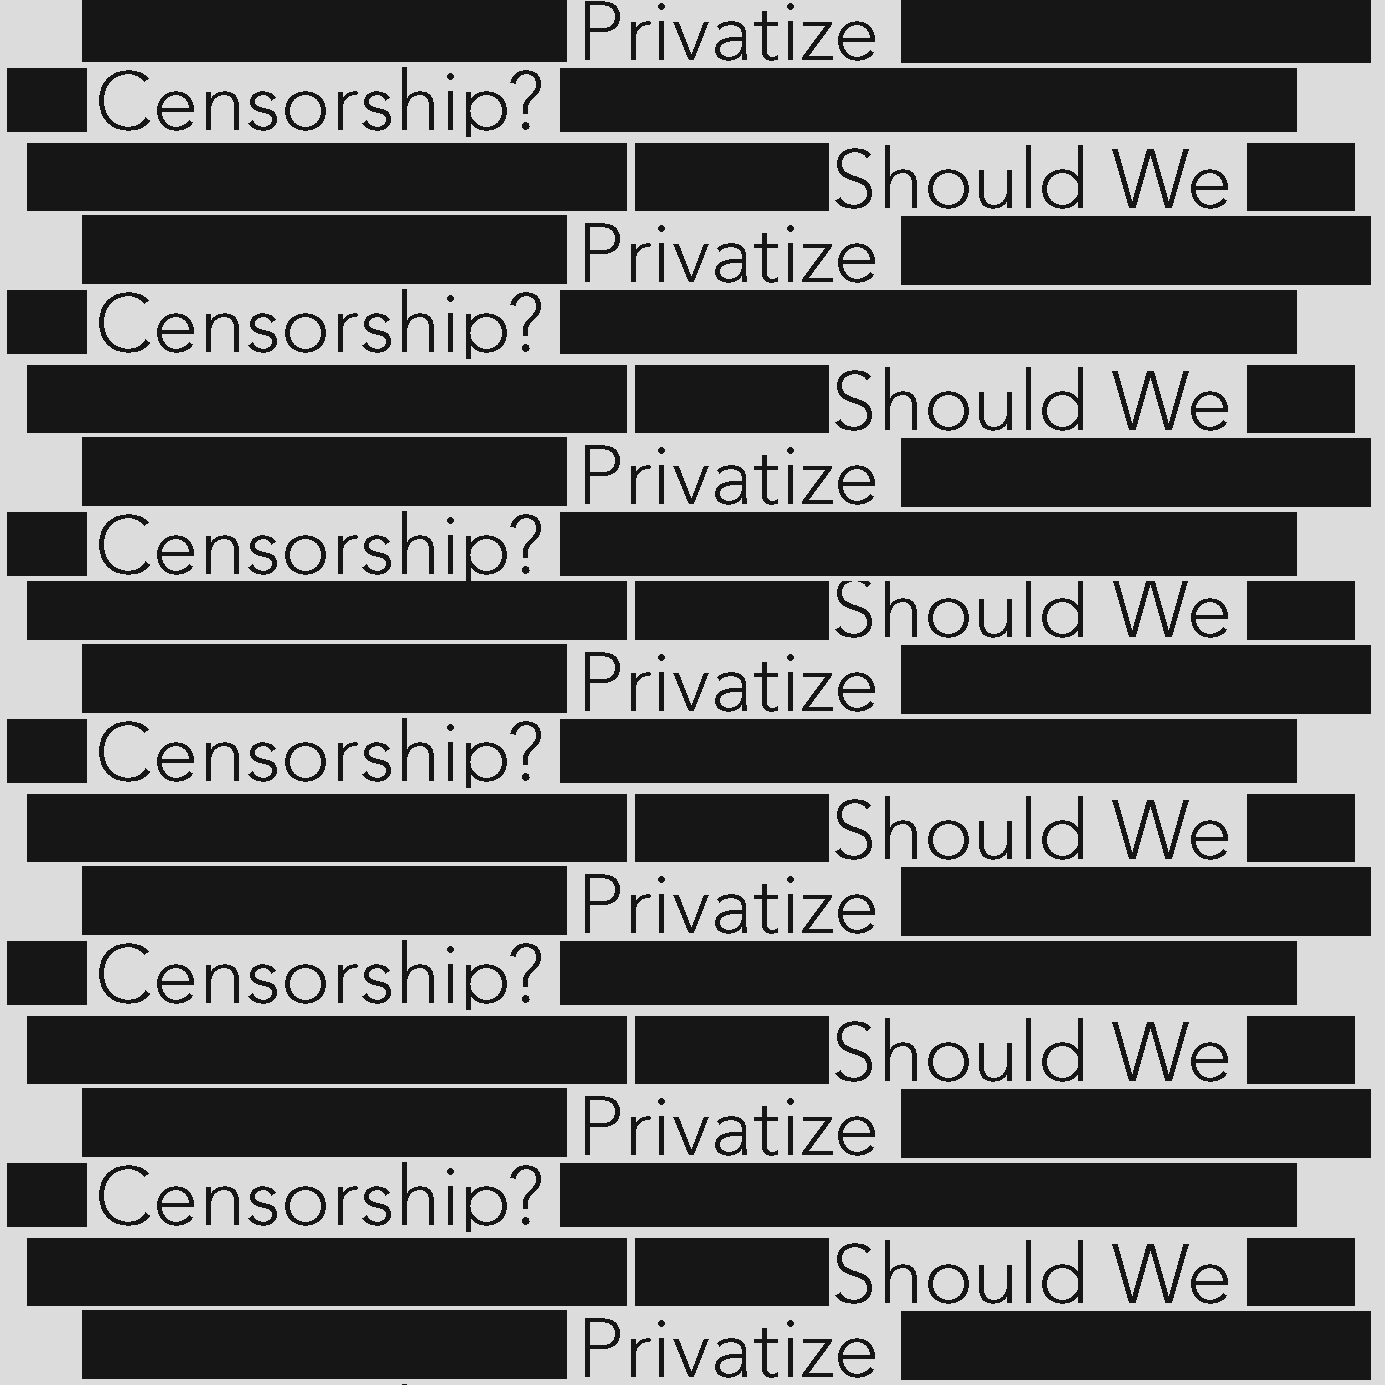 negative effects of censorship on society